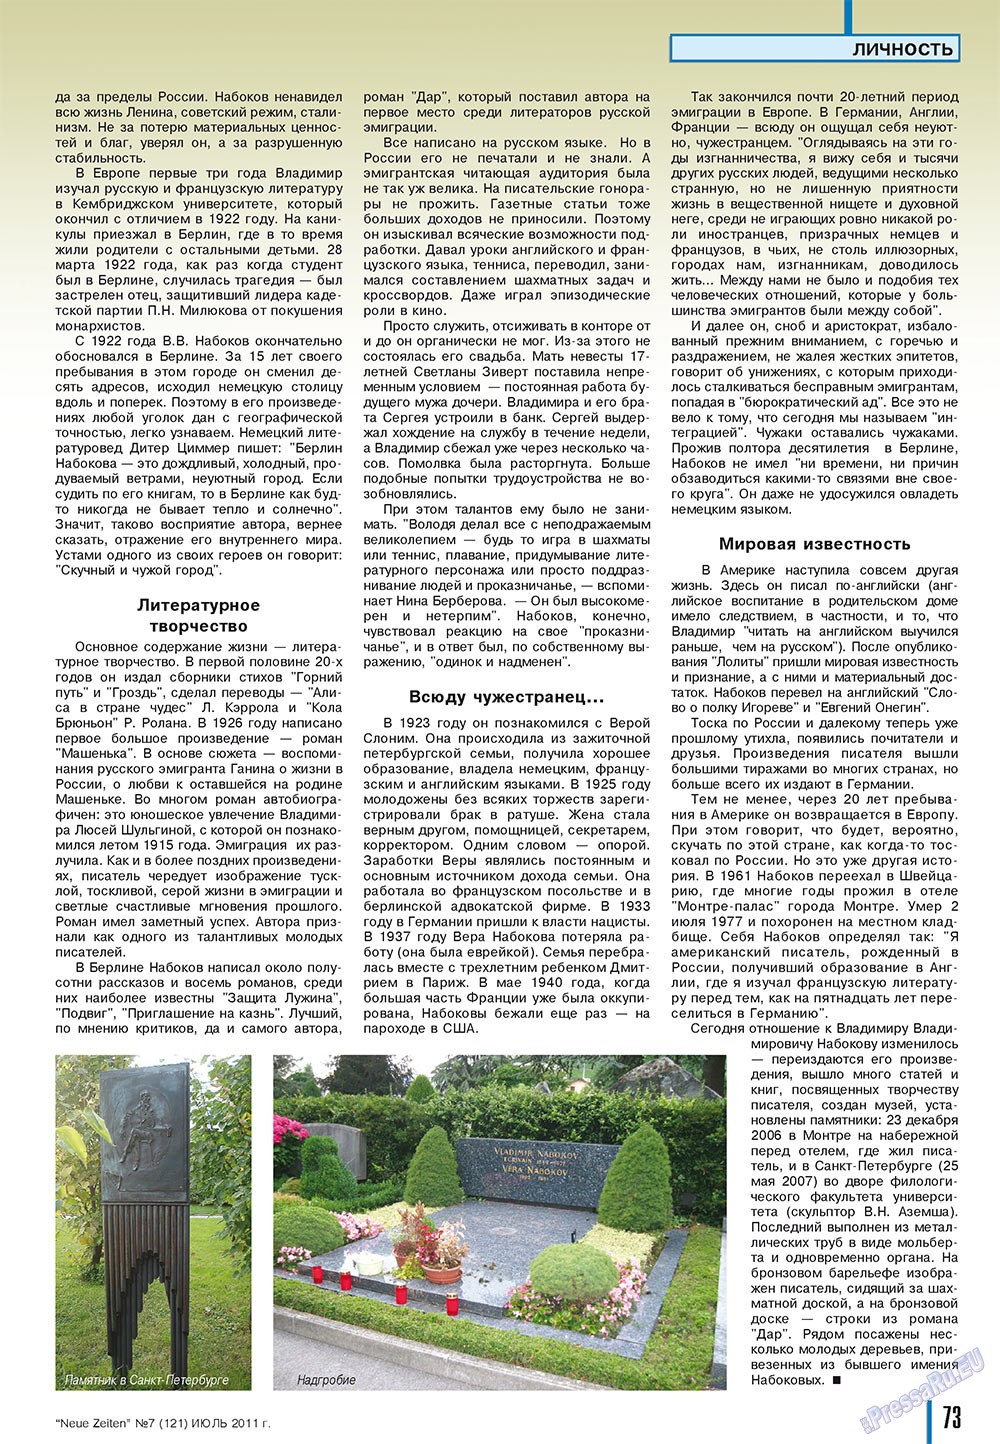 Neue Zeiten (журнал). 2011 год, номер 7, стр. 73